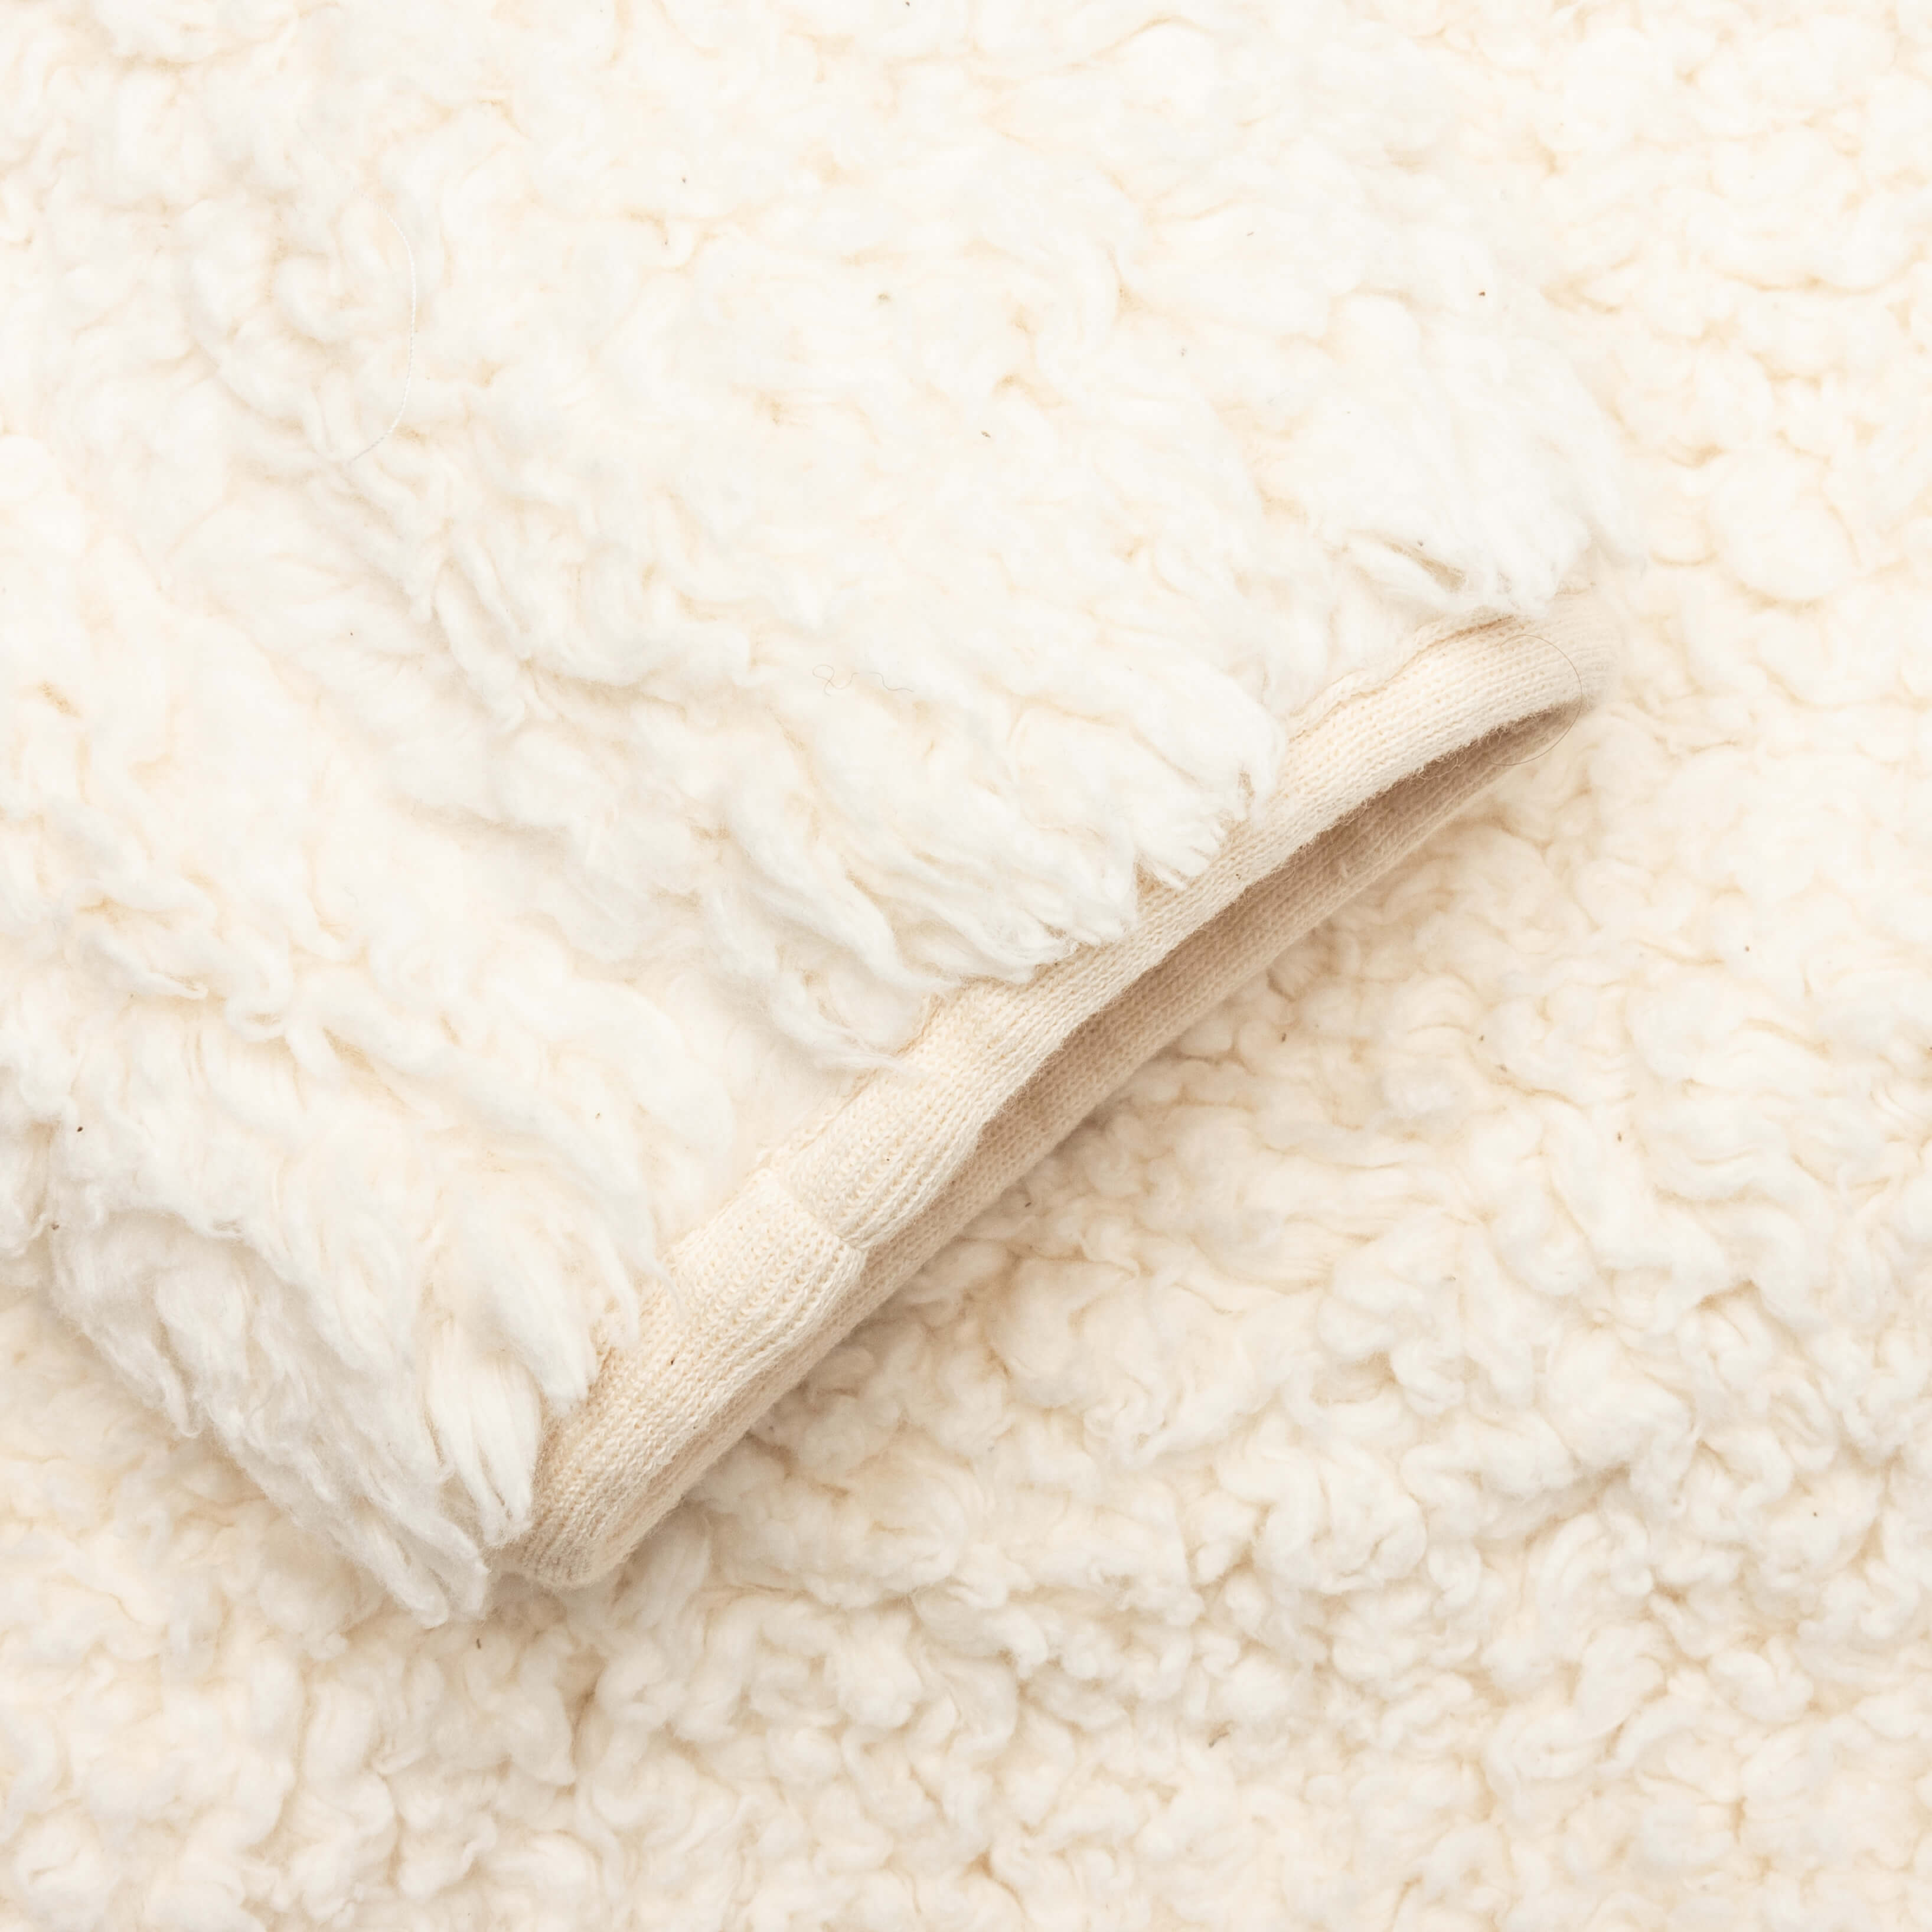 Natural Cotton Fleece Zip Jacket- Eggshell, , large image number null